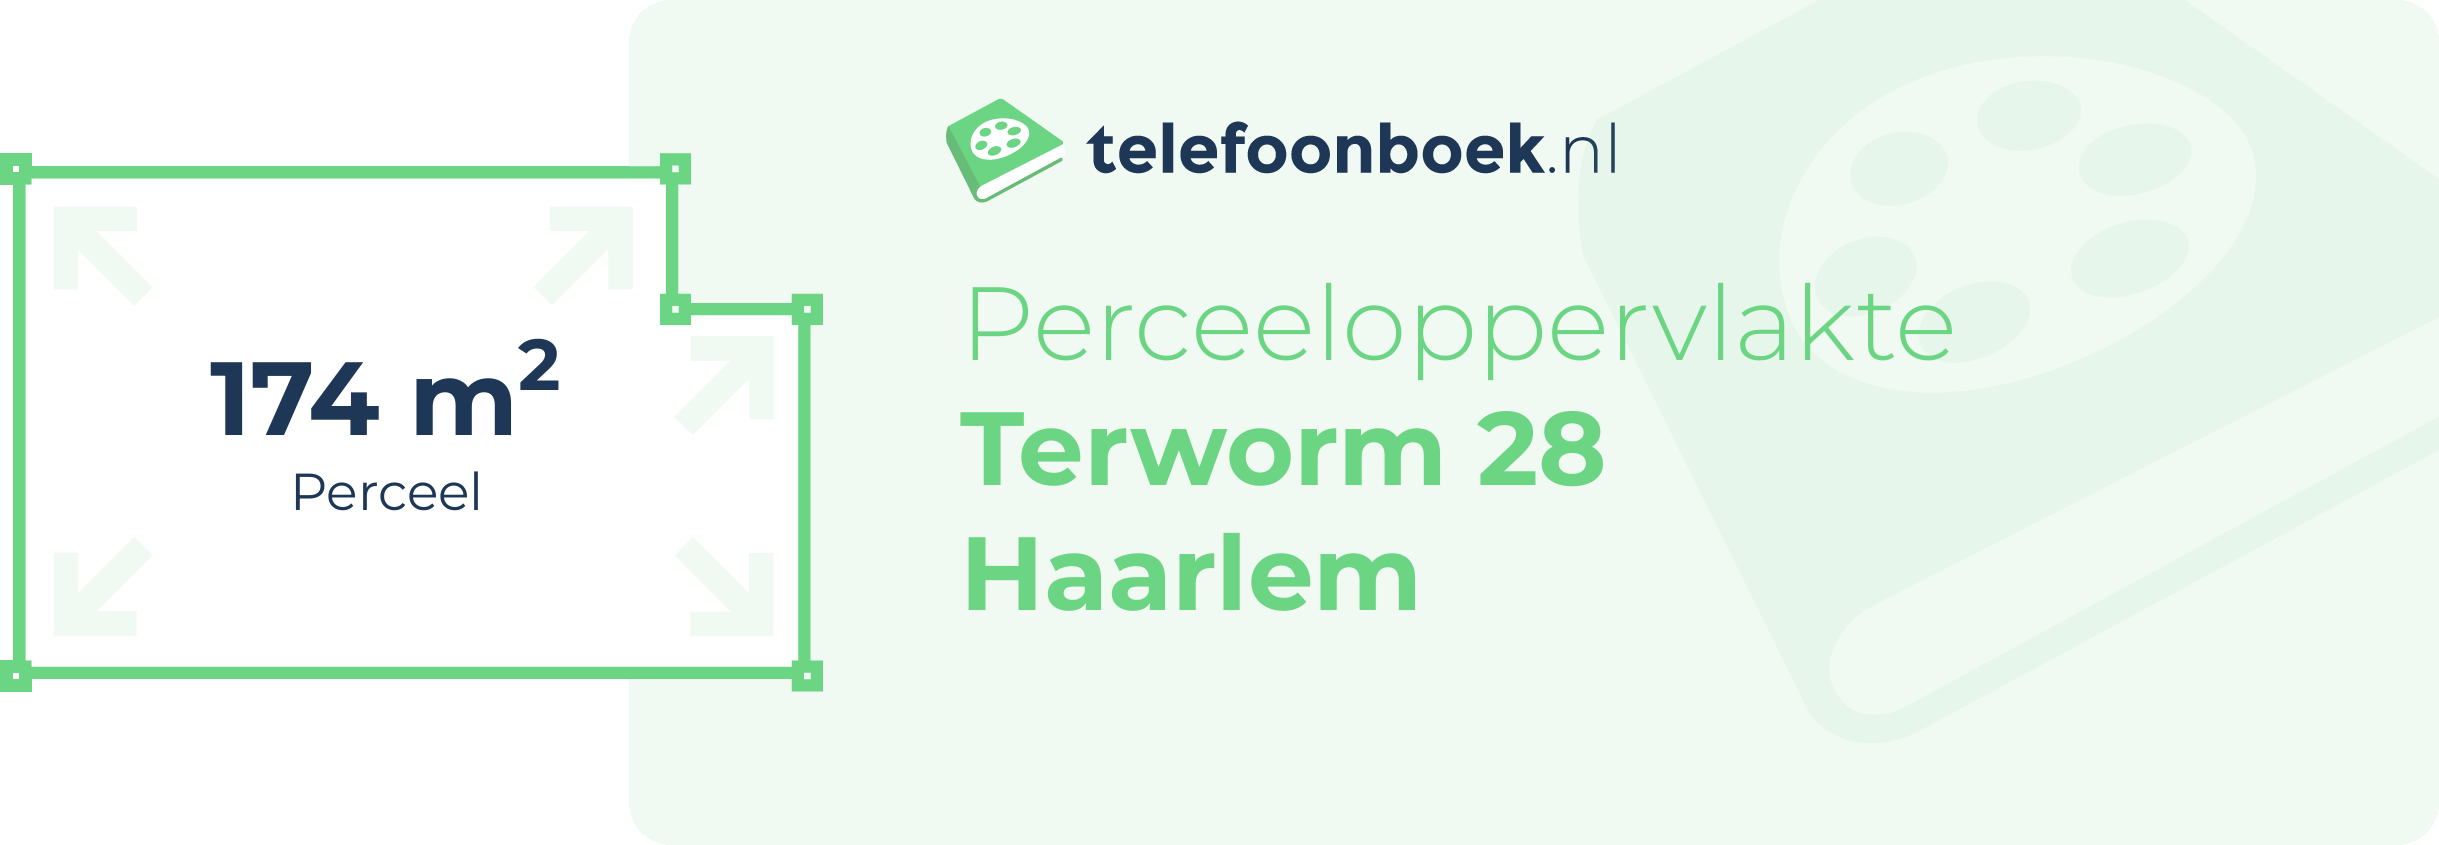 Perceeloppervlakte Terworm 28 Haarlem